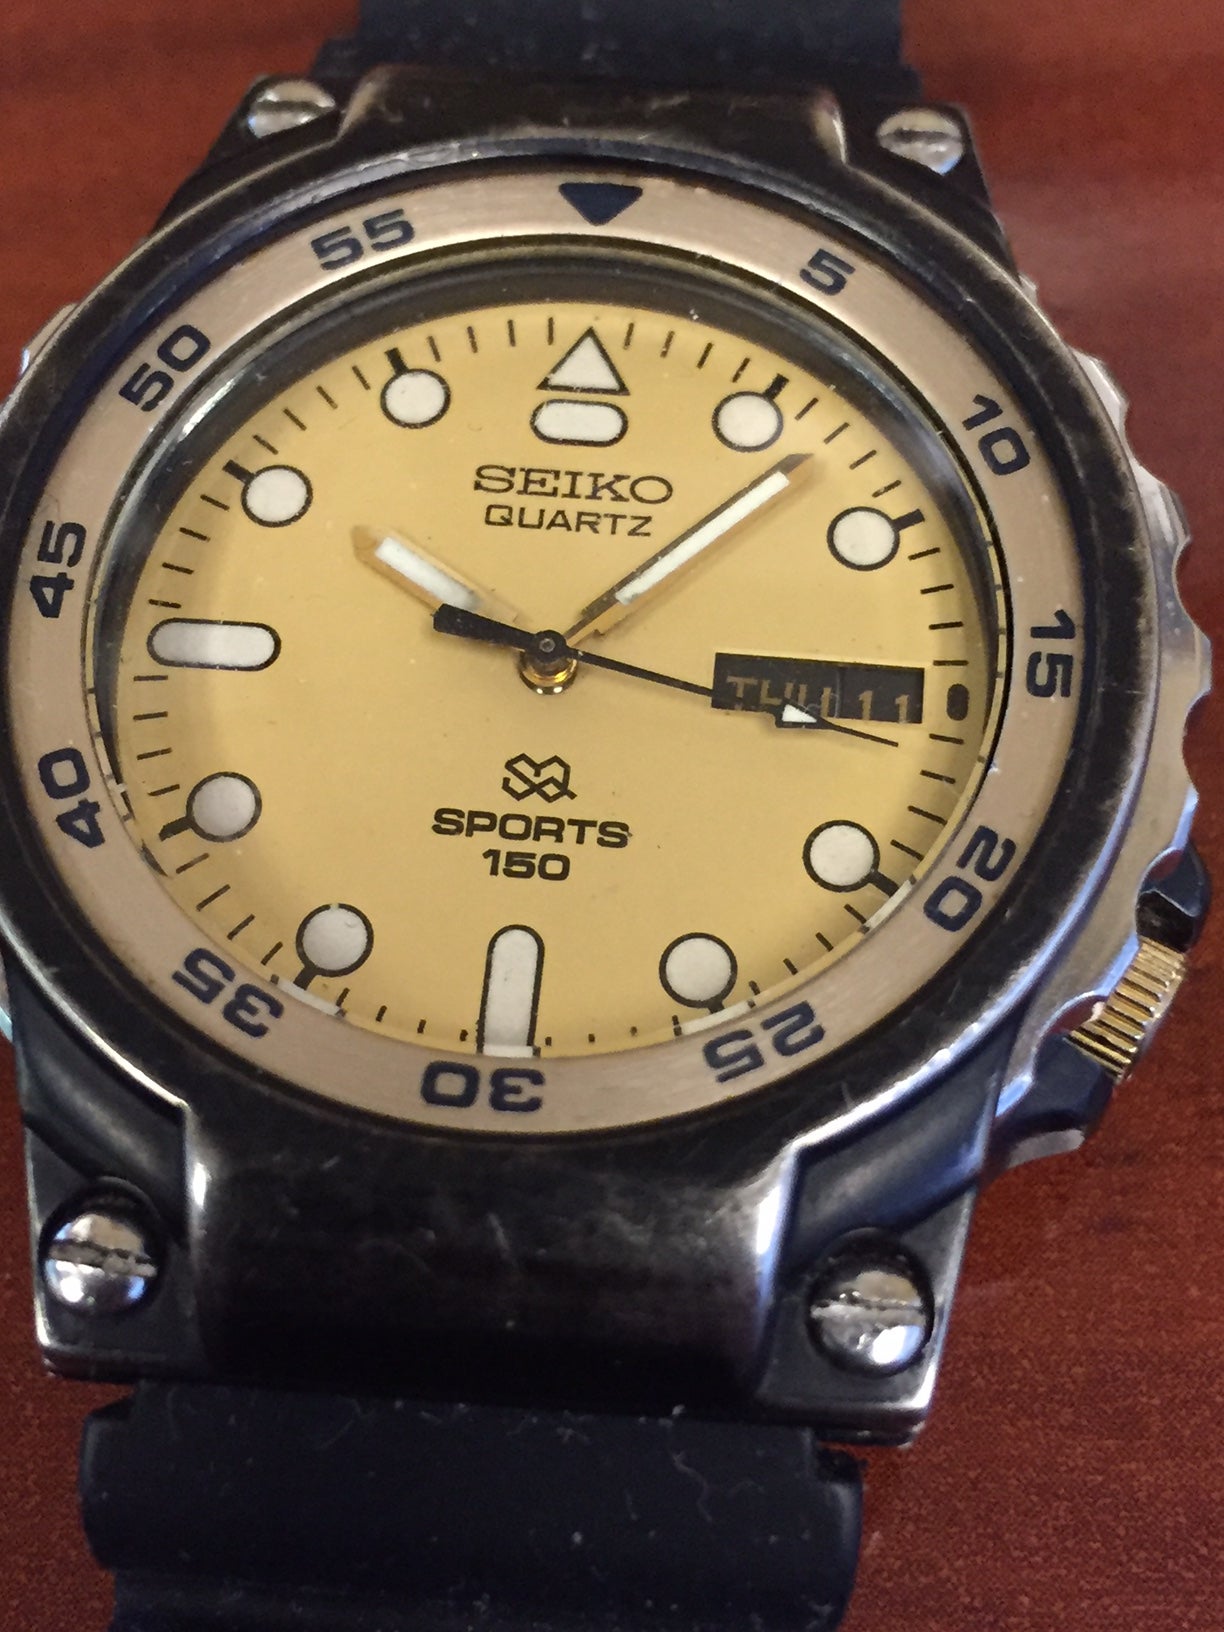 Vintage Seiko Diver: 5h23-6379 | WatchUSeek Watch Forums